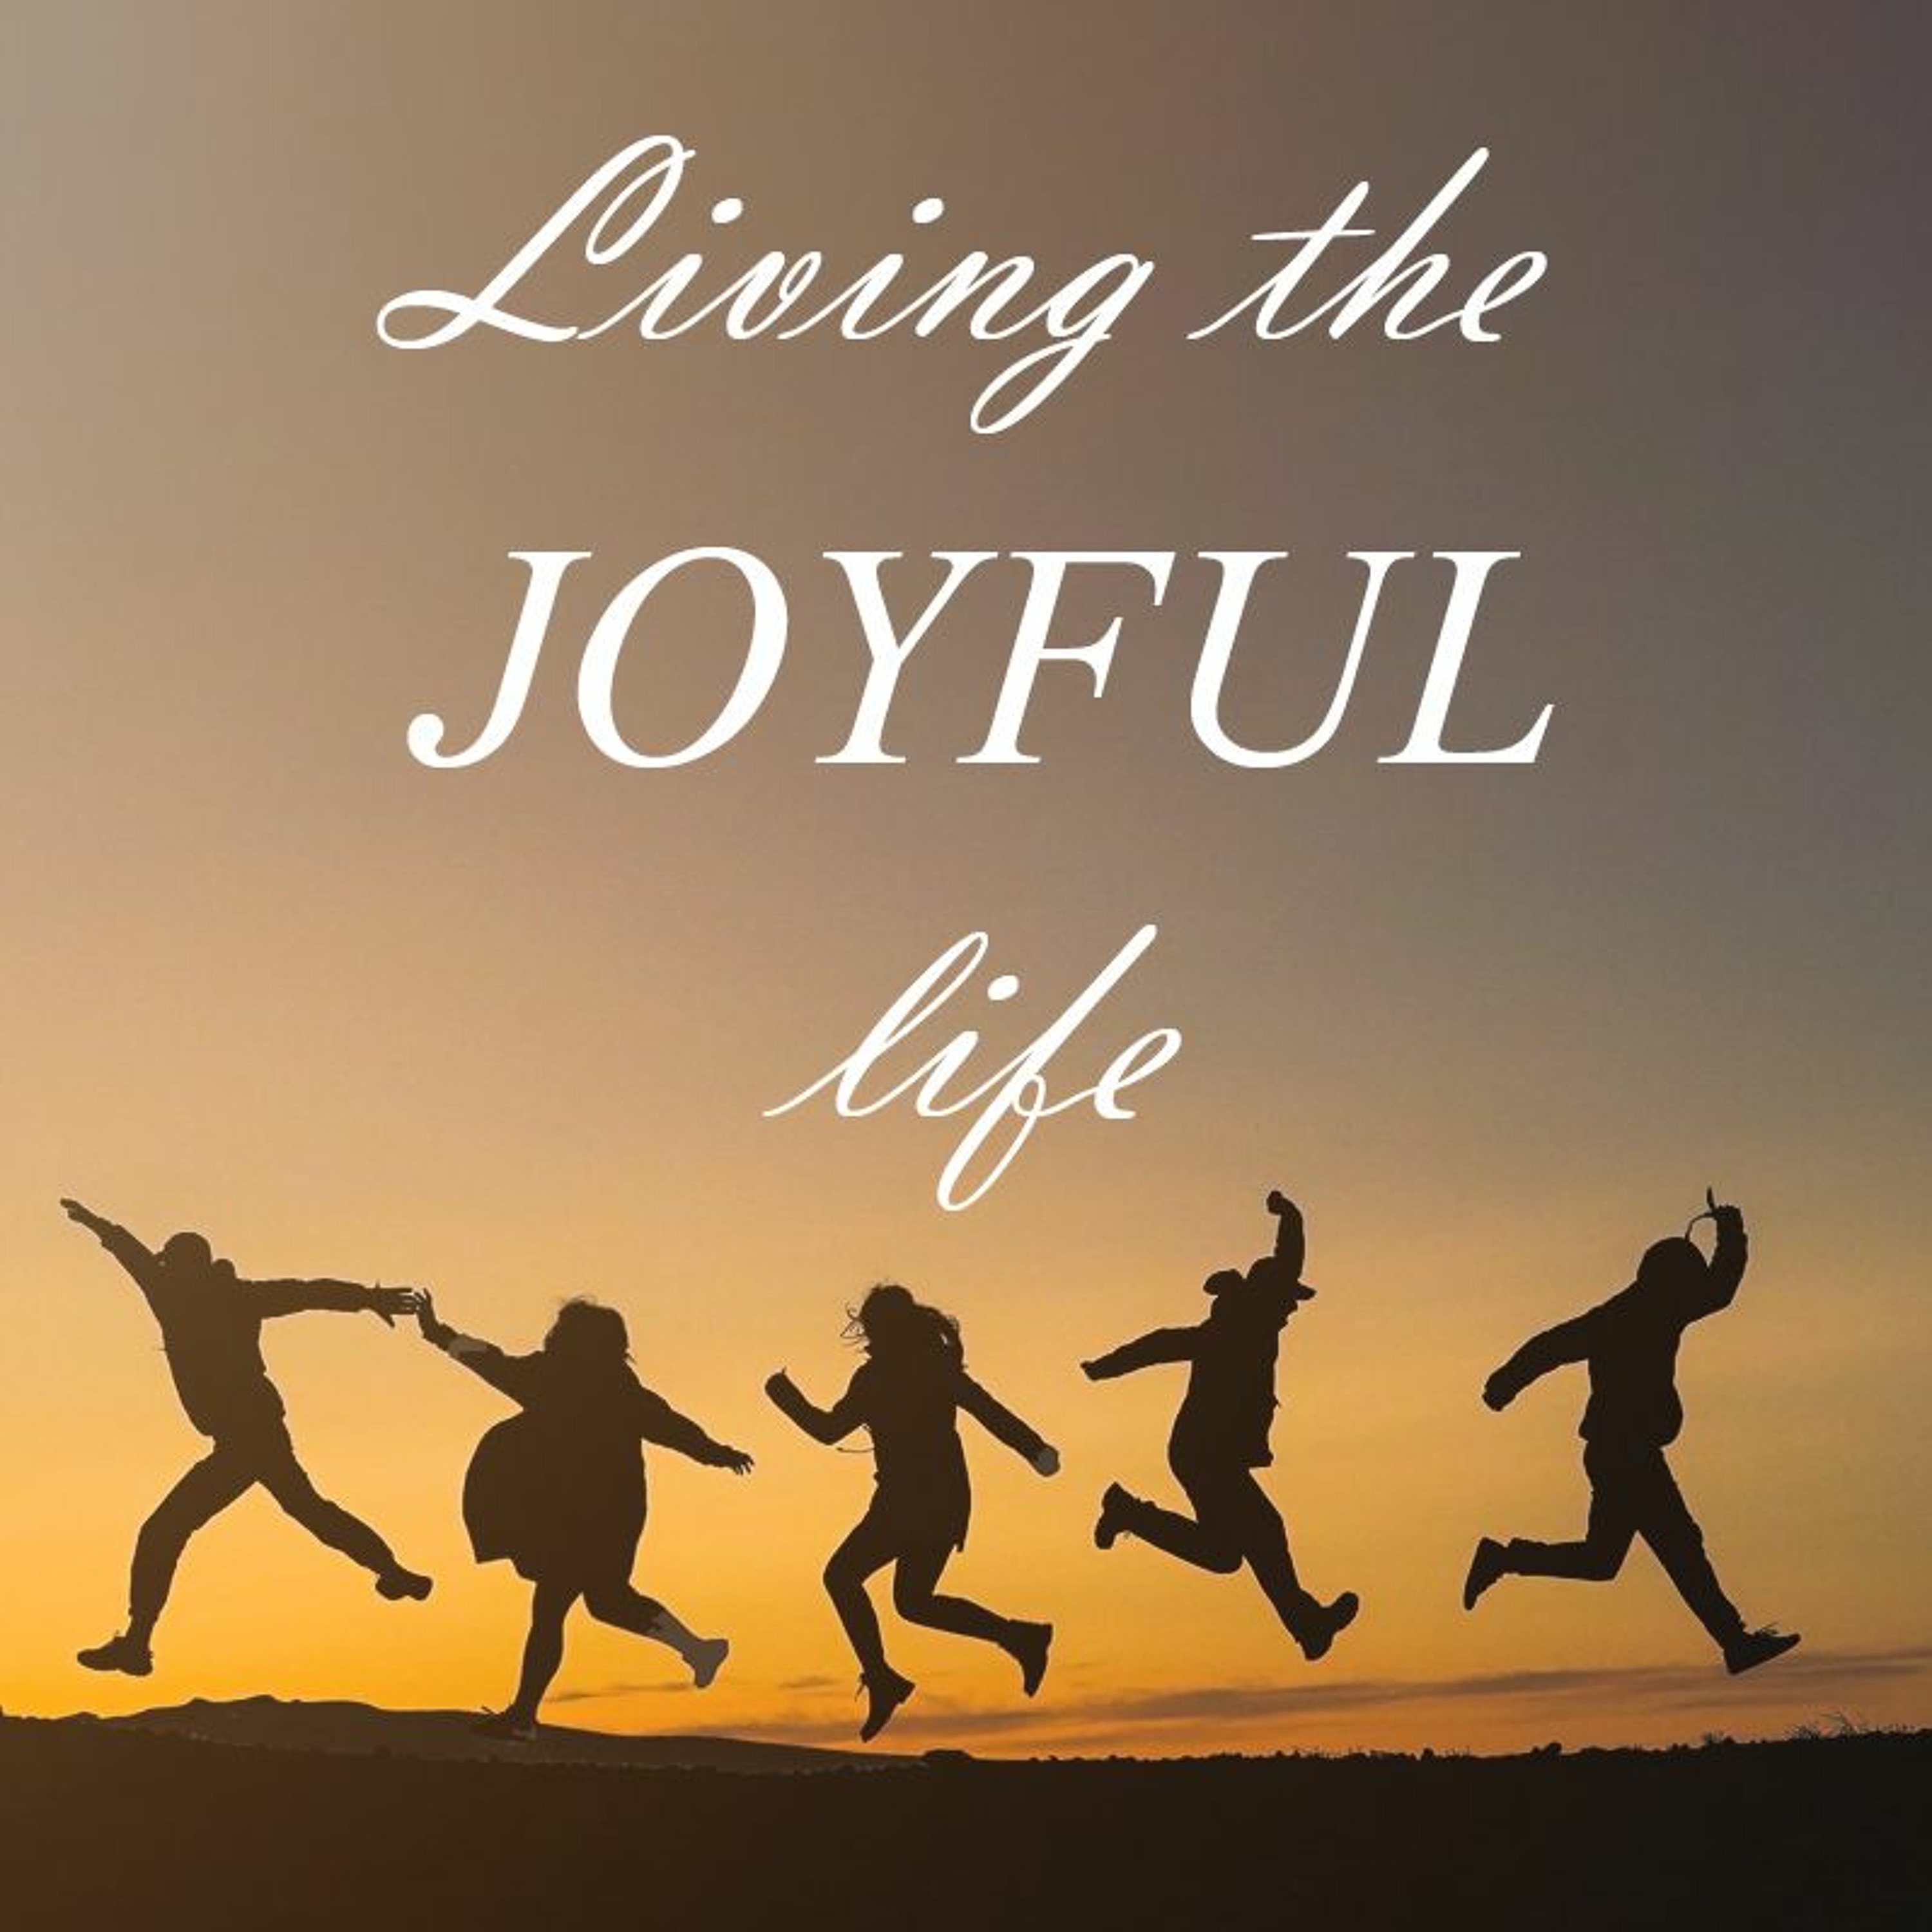 Living the joyful life | Knowing Christ